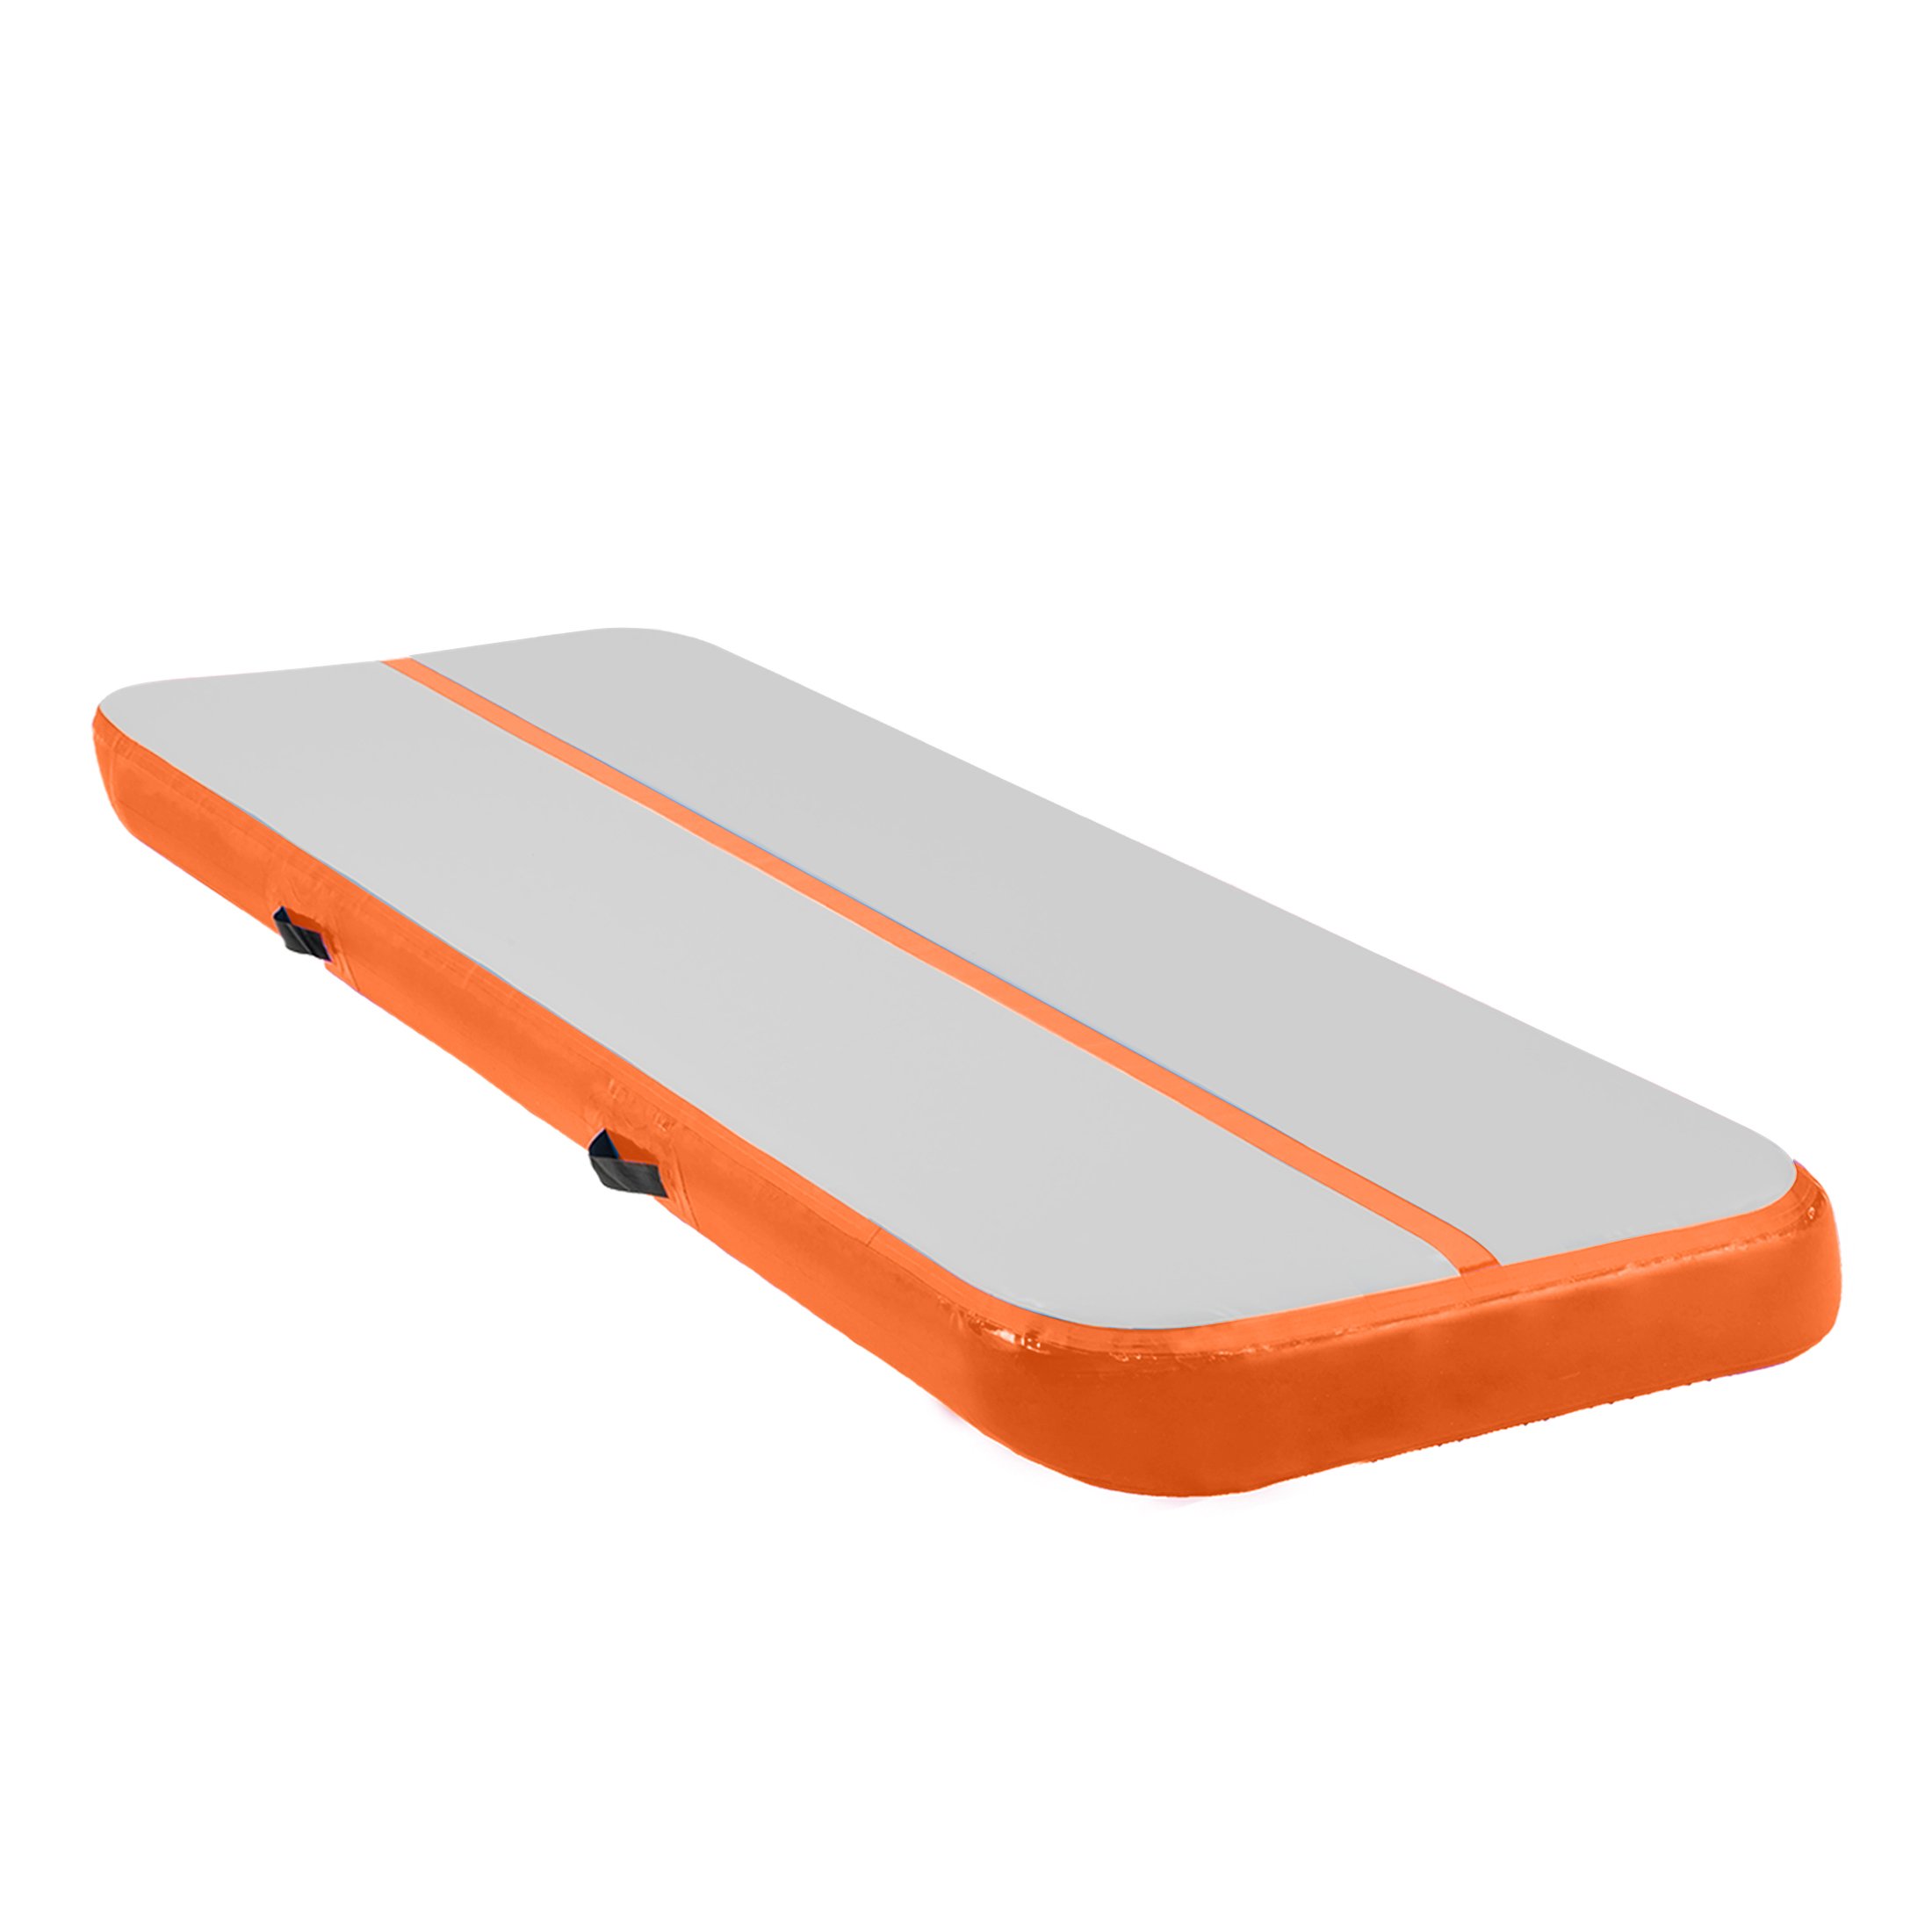 5m x 1m Air Track Inflatable Tumbling Mat Gymnastics - Orange Grey 1